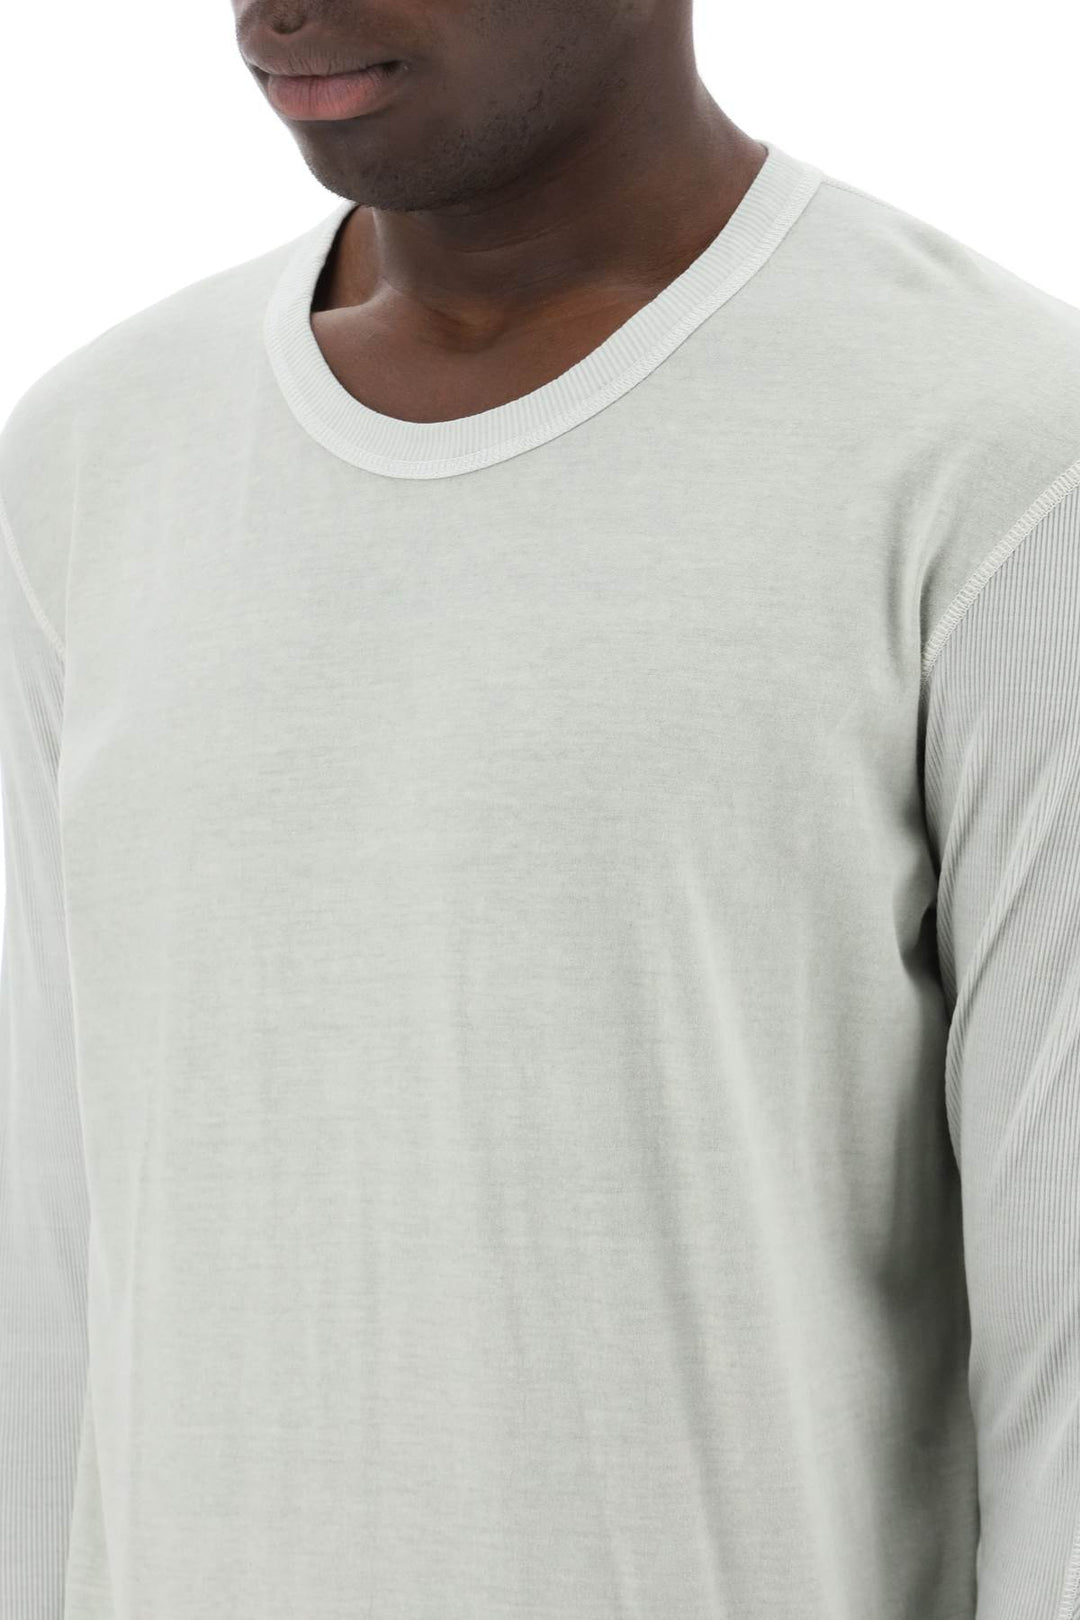 Boris Bidjan Saberi Long Sleeved Cotton T Shirt   Neutro